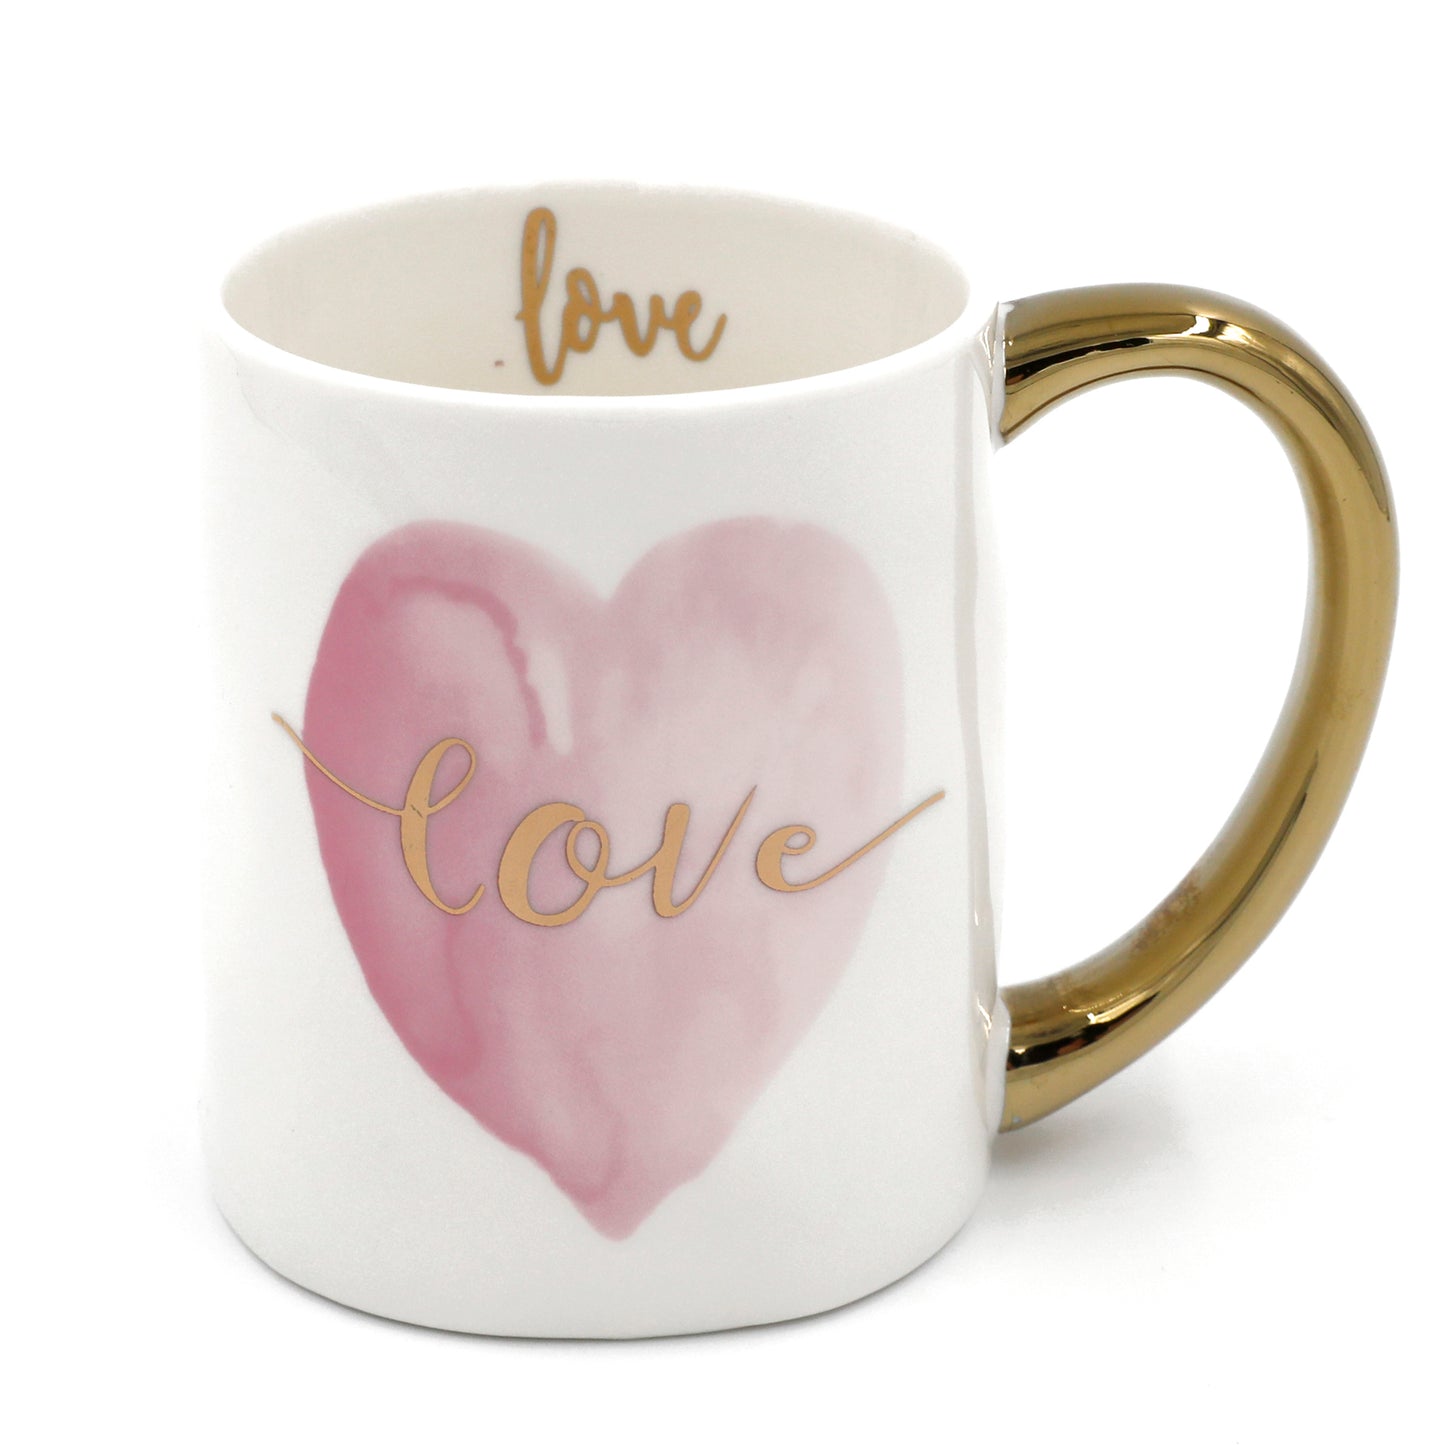 13.5 oz Stoneware Ceramic Mug With Sayings,"Love"